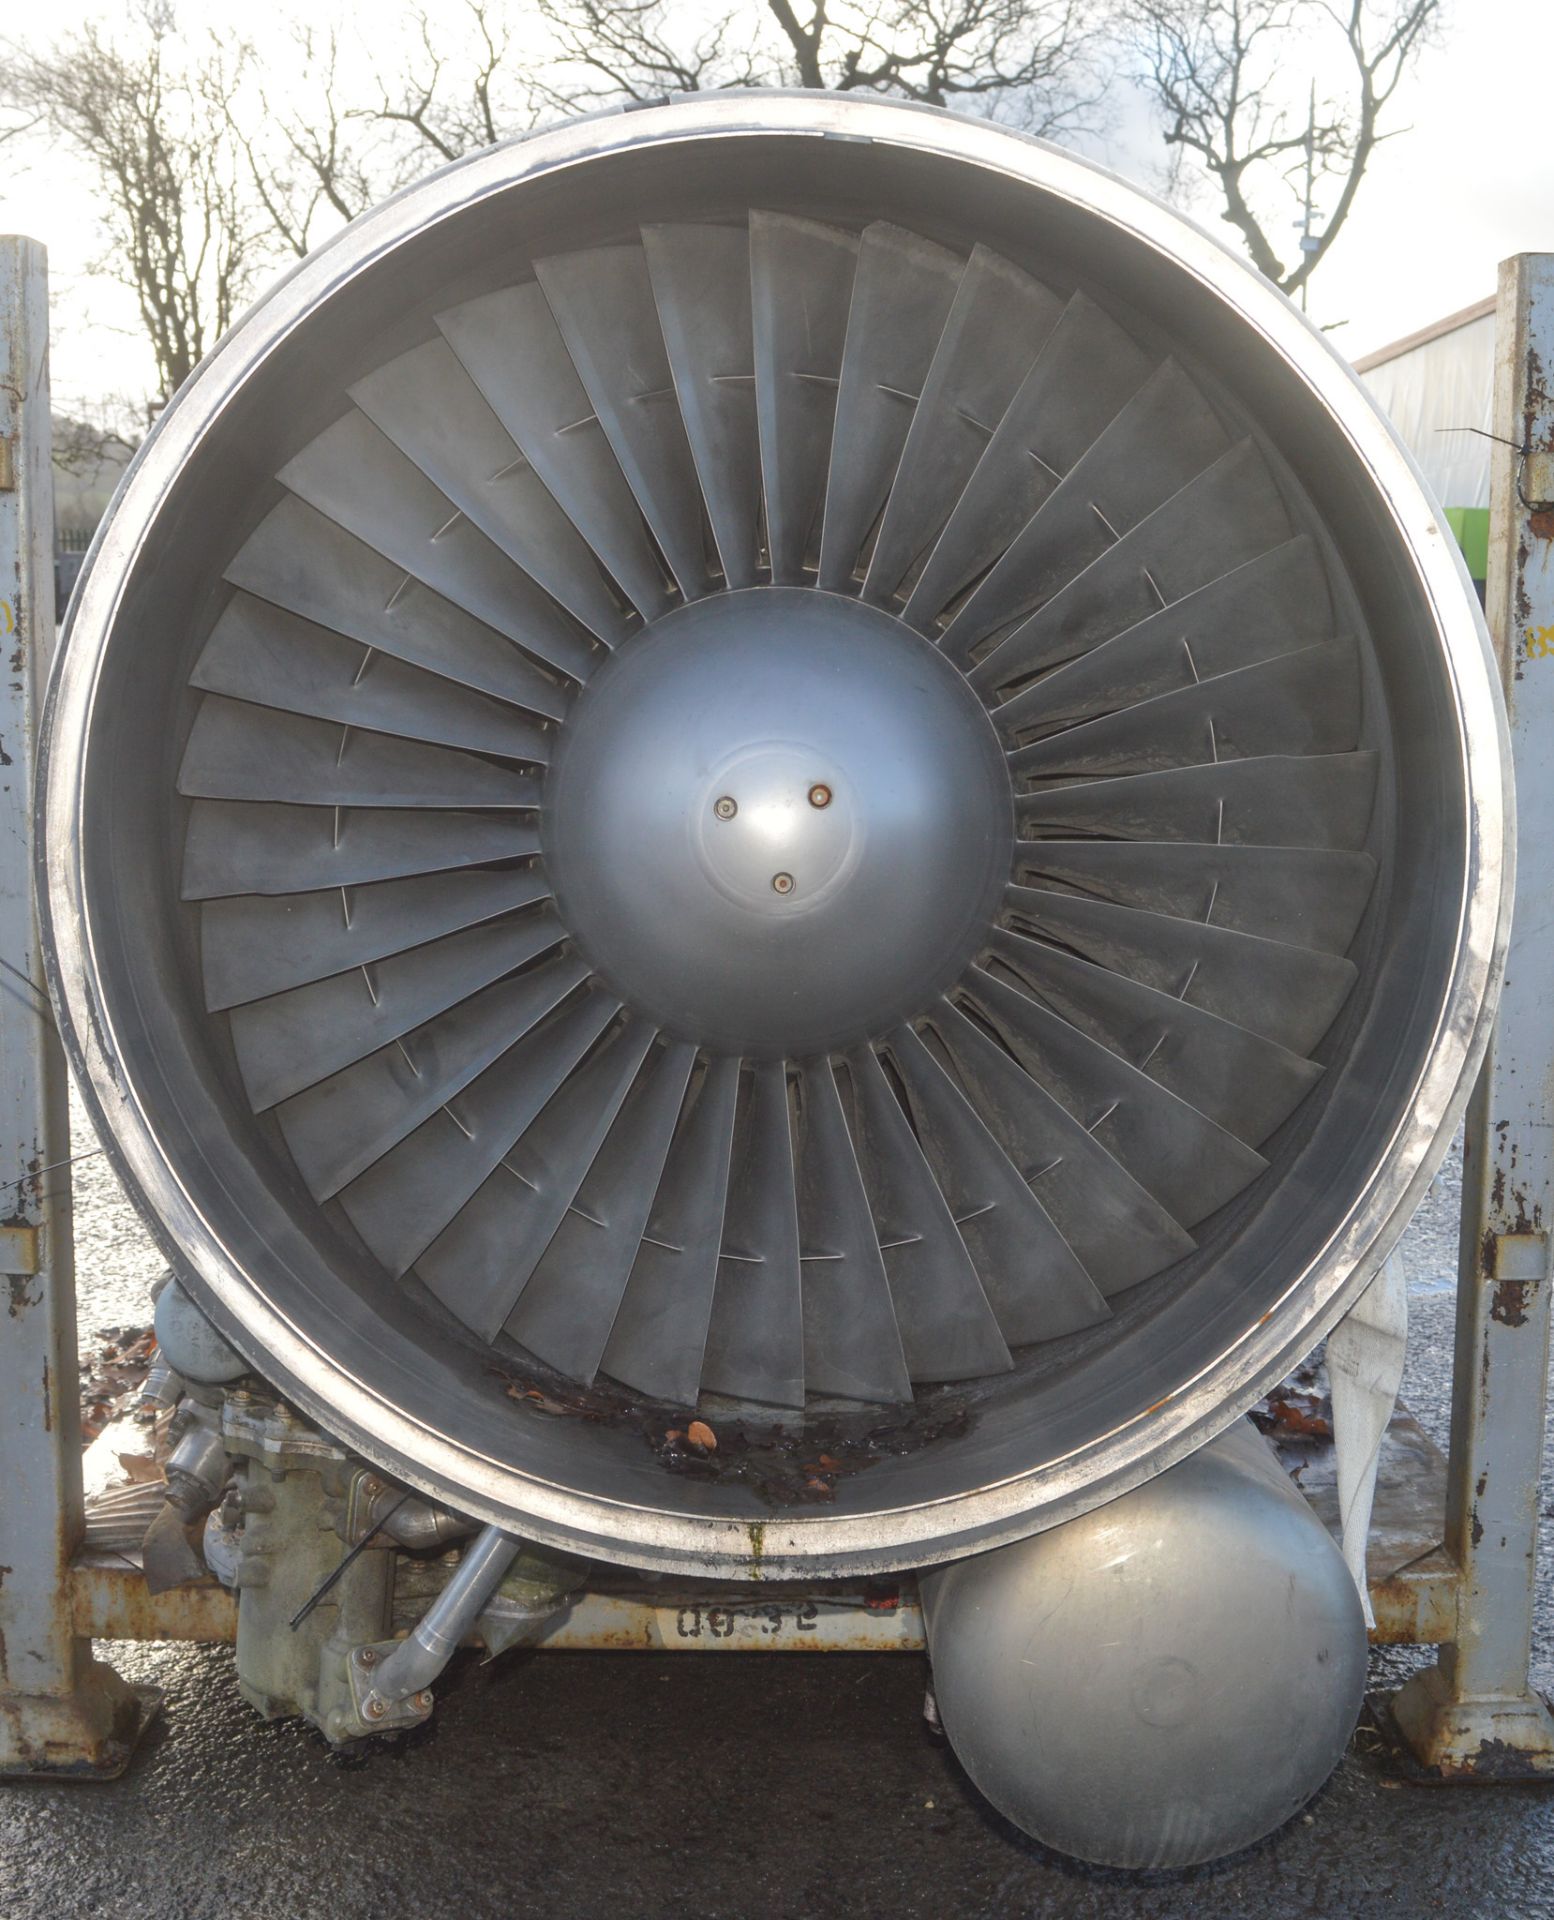 Rolls Royce RB199 jet turbine engine(Ex RAF Tornado) - Image 3 of 4